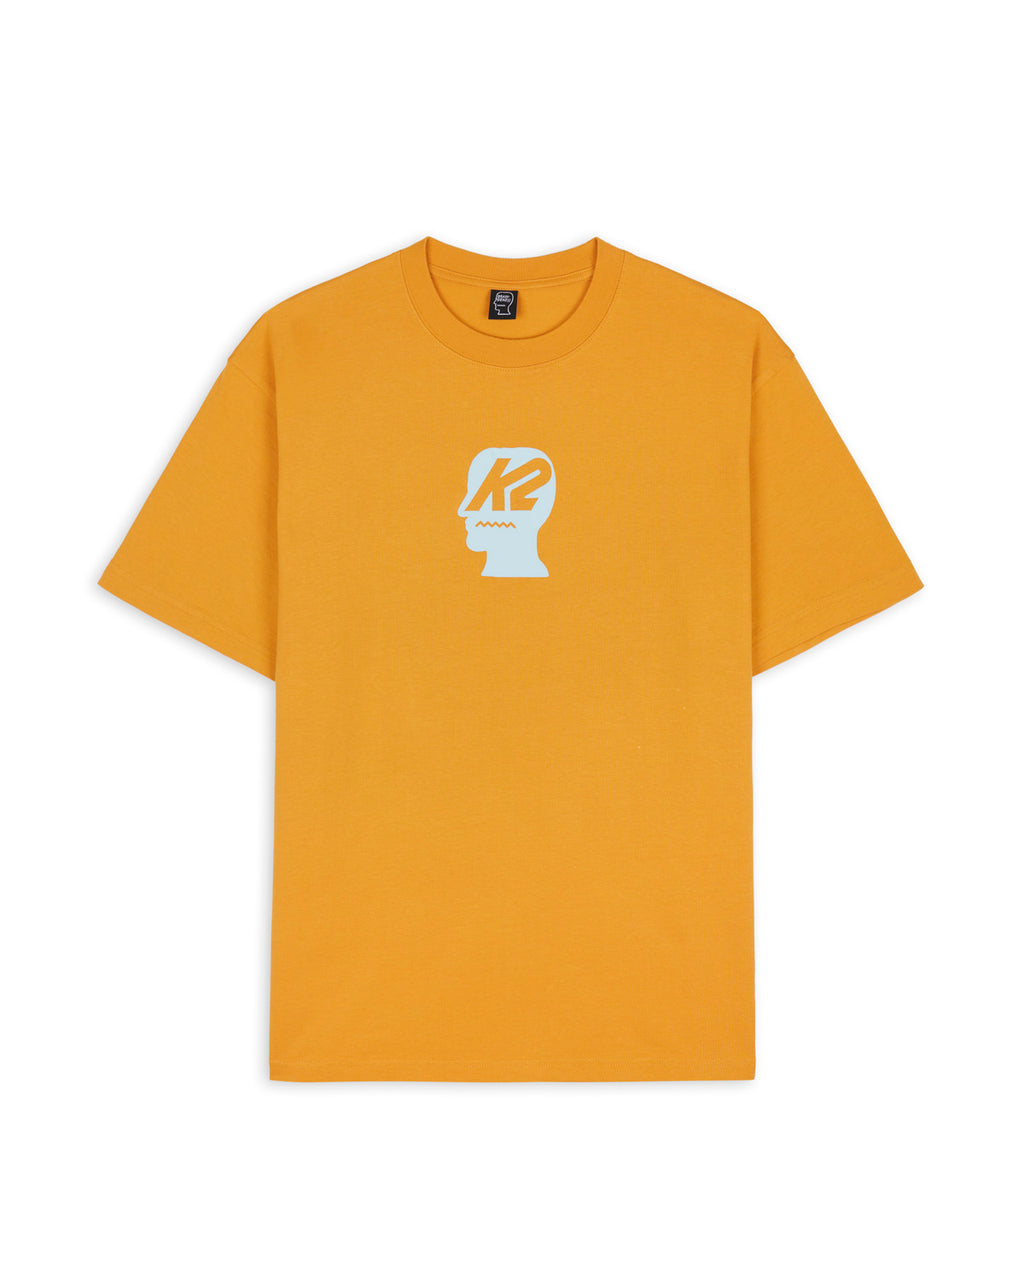 K2 x Brain Dead Logo Lockup T-Shirt - Orange 1